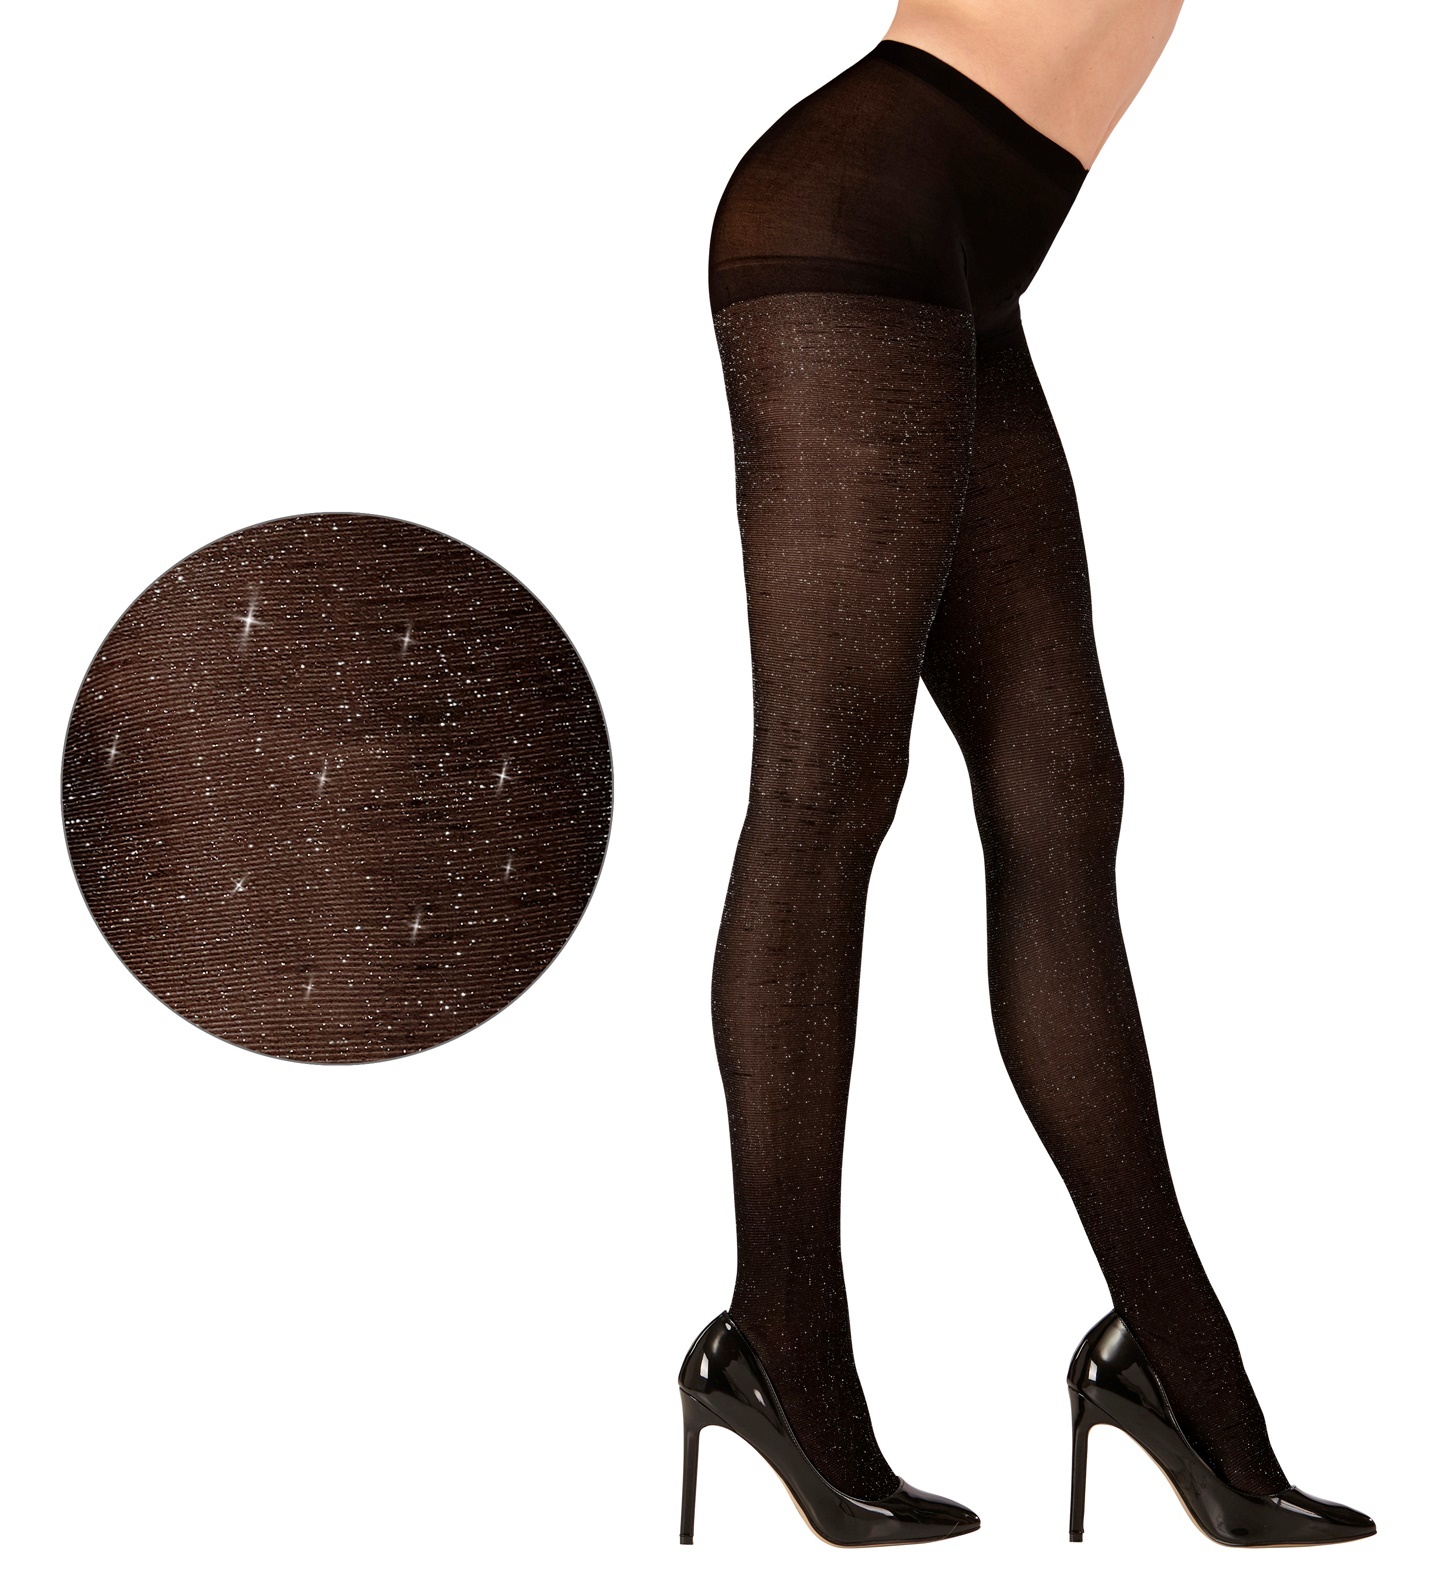 Geheim Octrooi definitief Panty in de kleur glitter zwart - e-Carnavalskleding